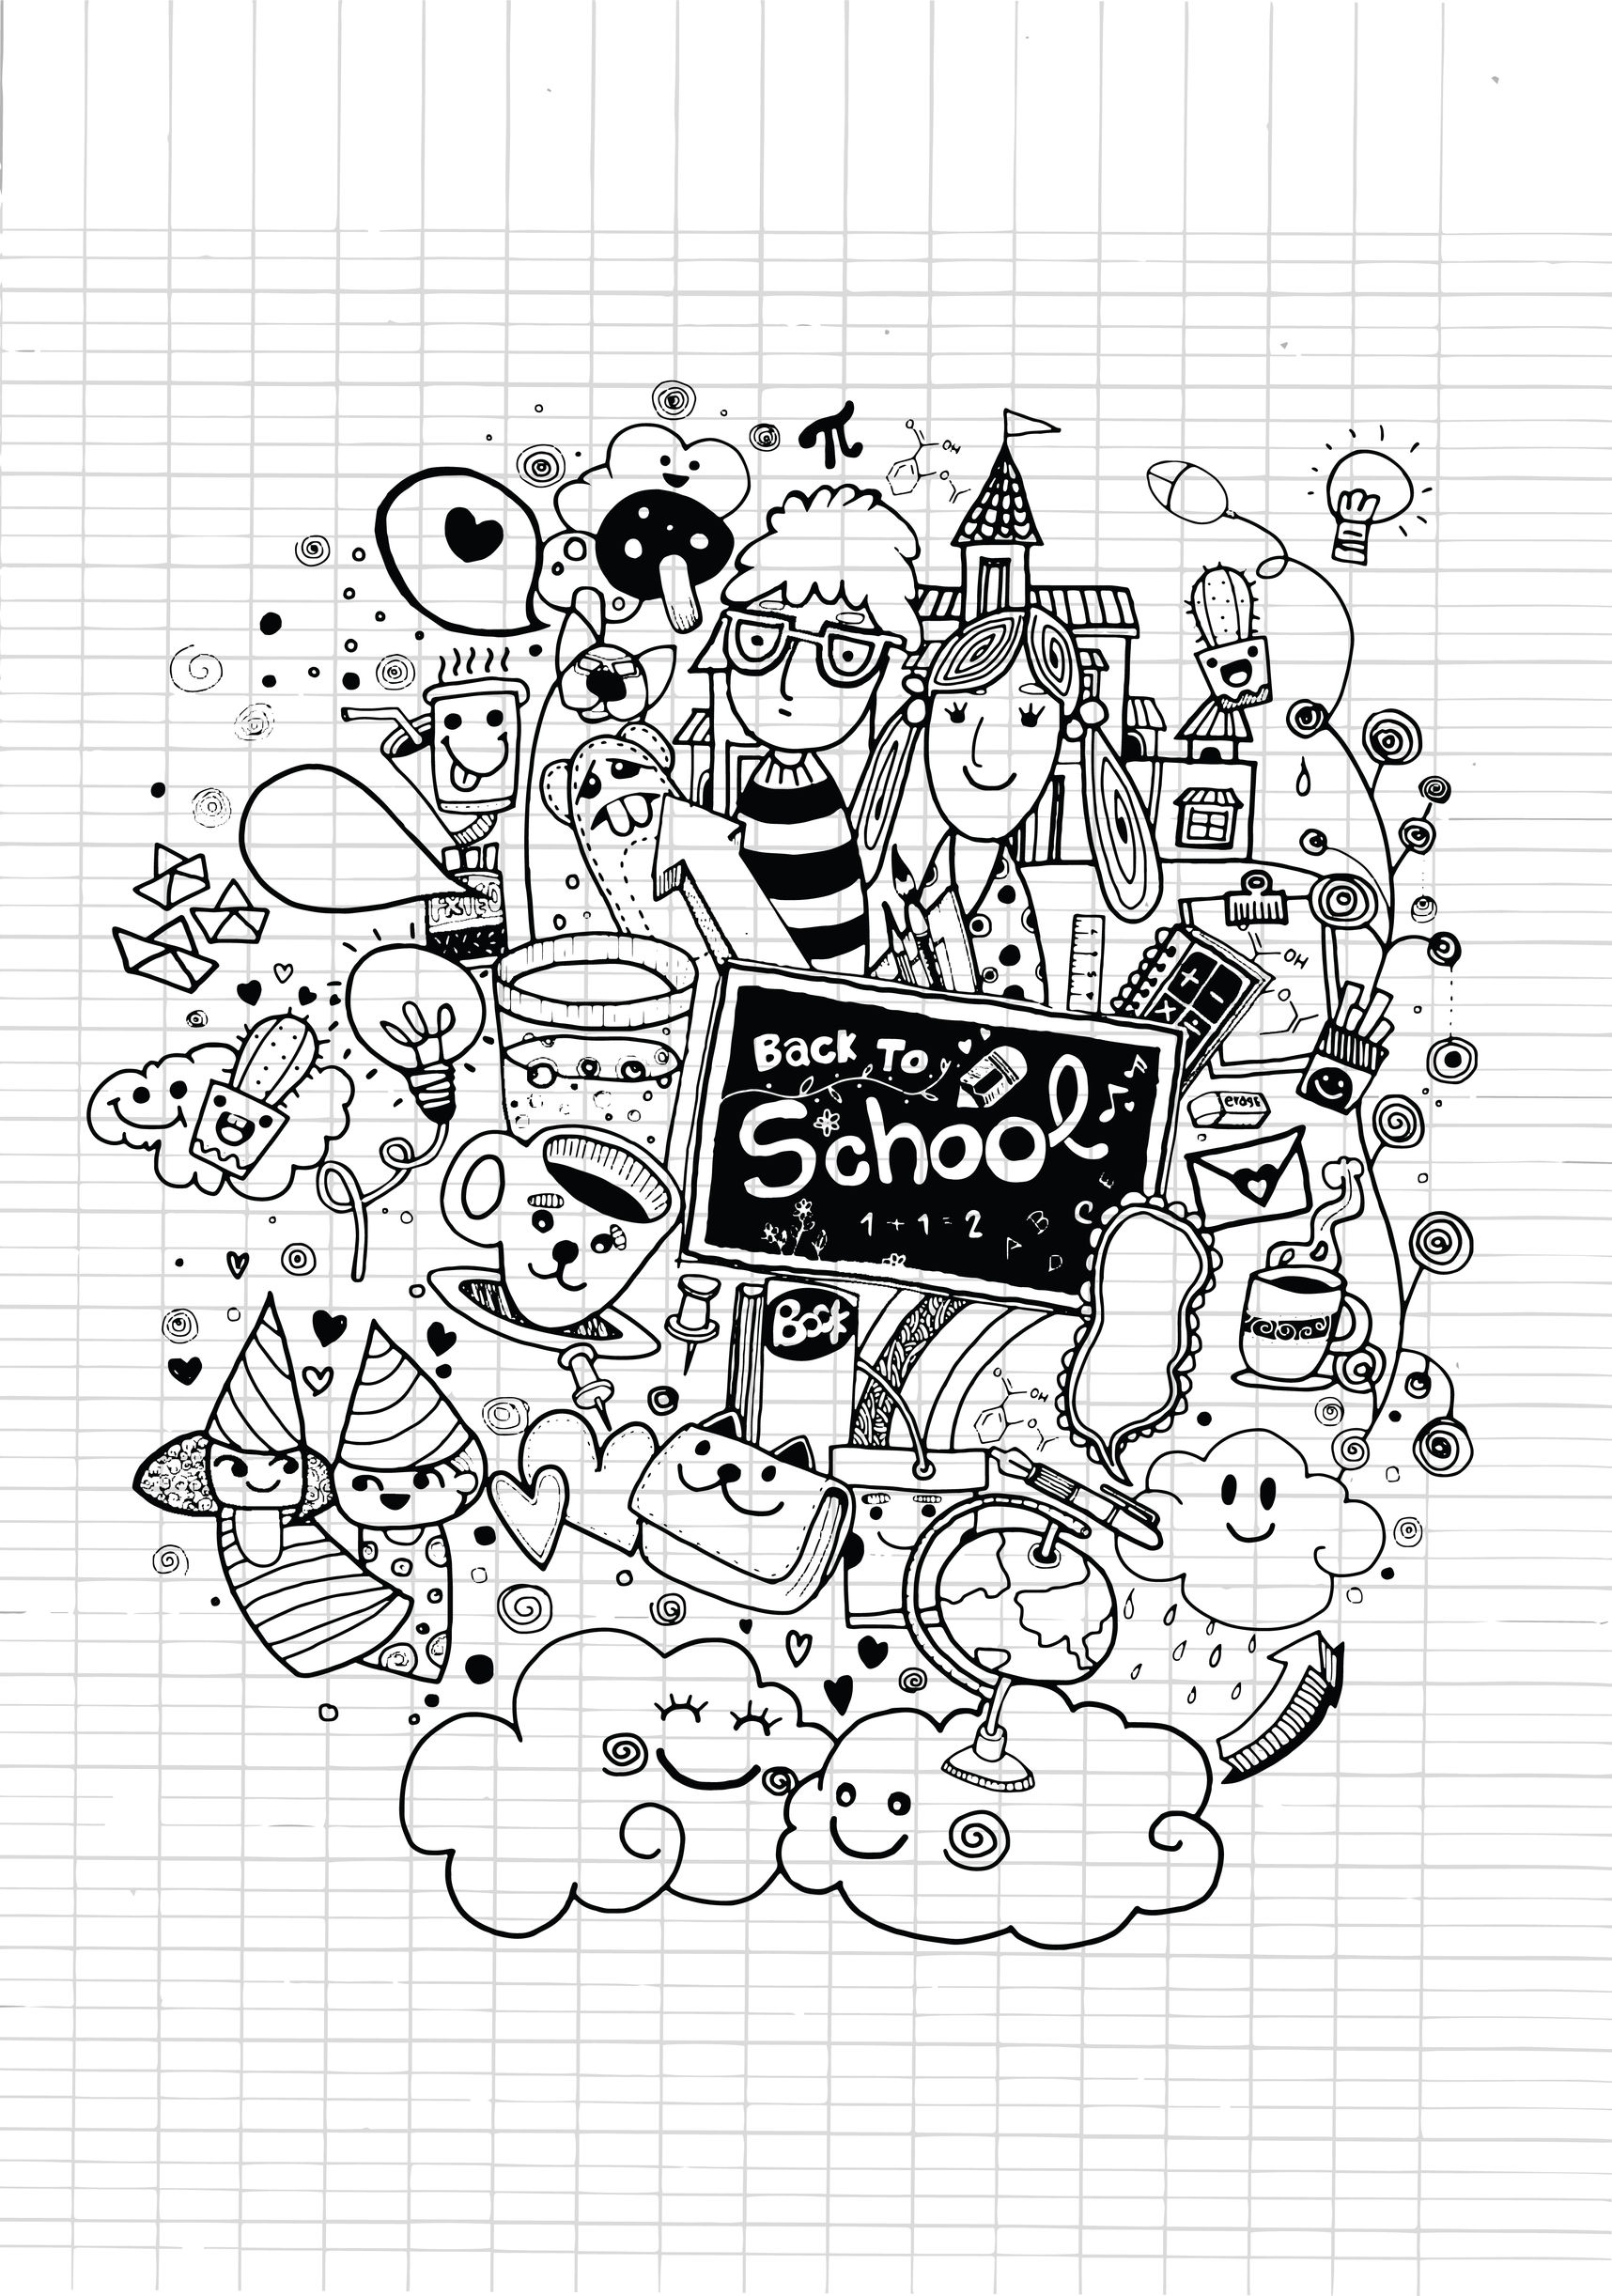 Back to school in Doodle